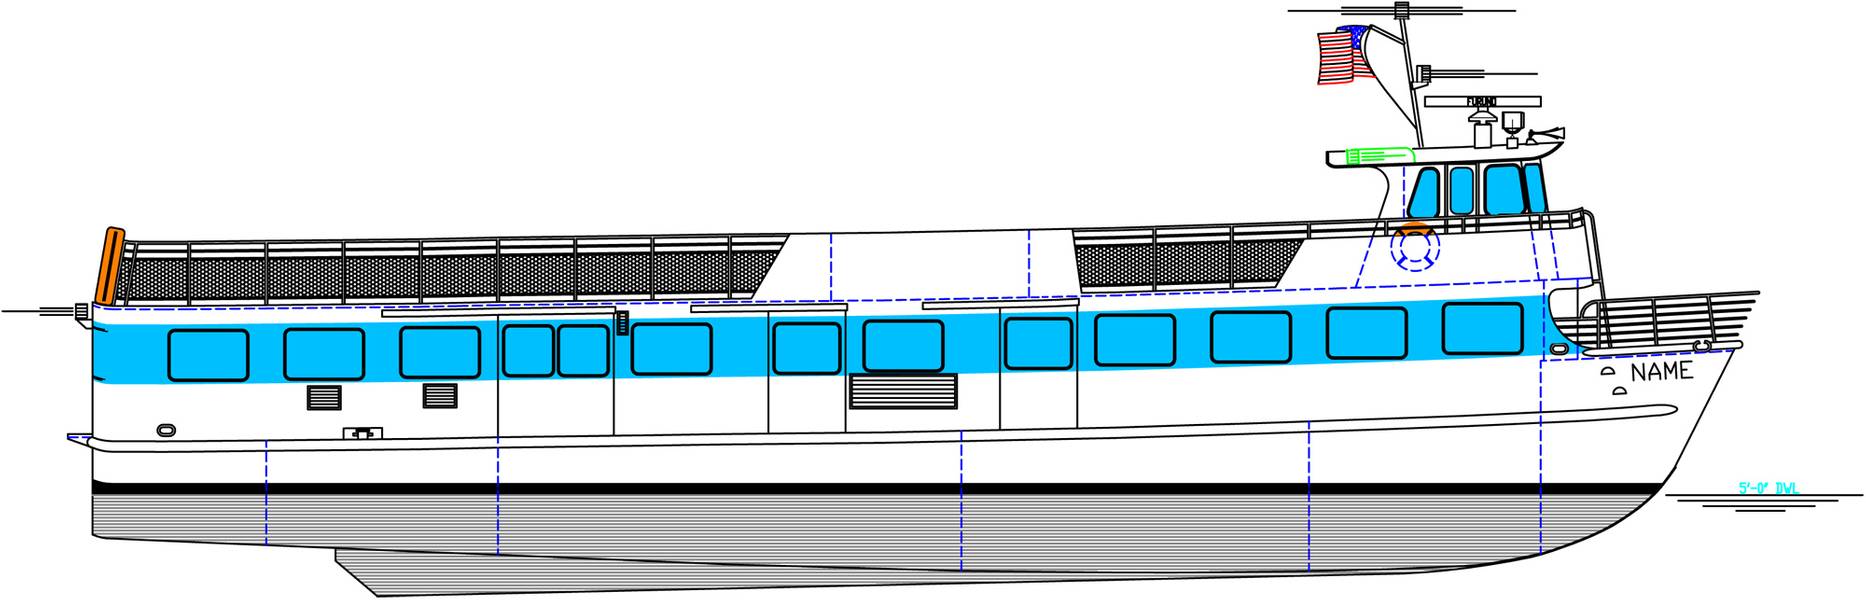 O ferry Blount de 85 pés será construído para Fire Island Ferries. (Imagem: Blount Boats)